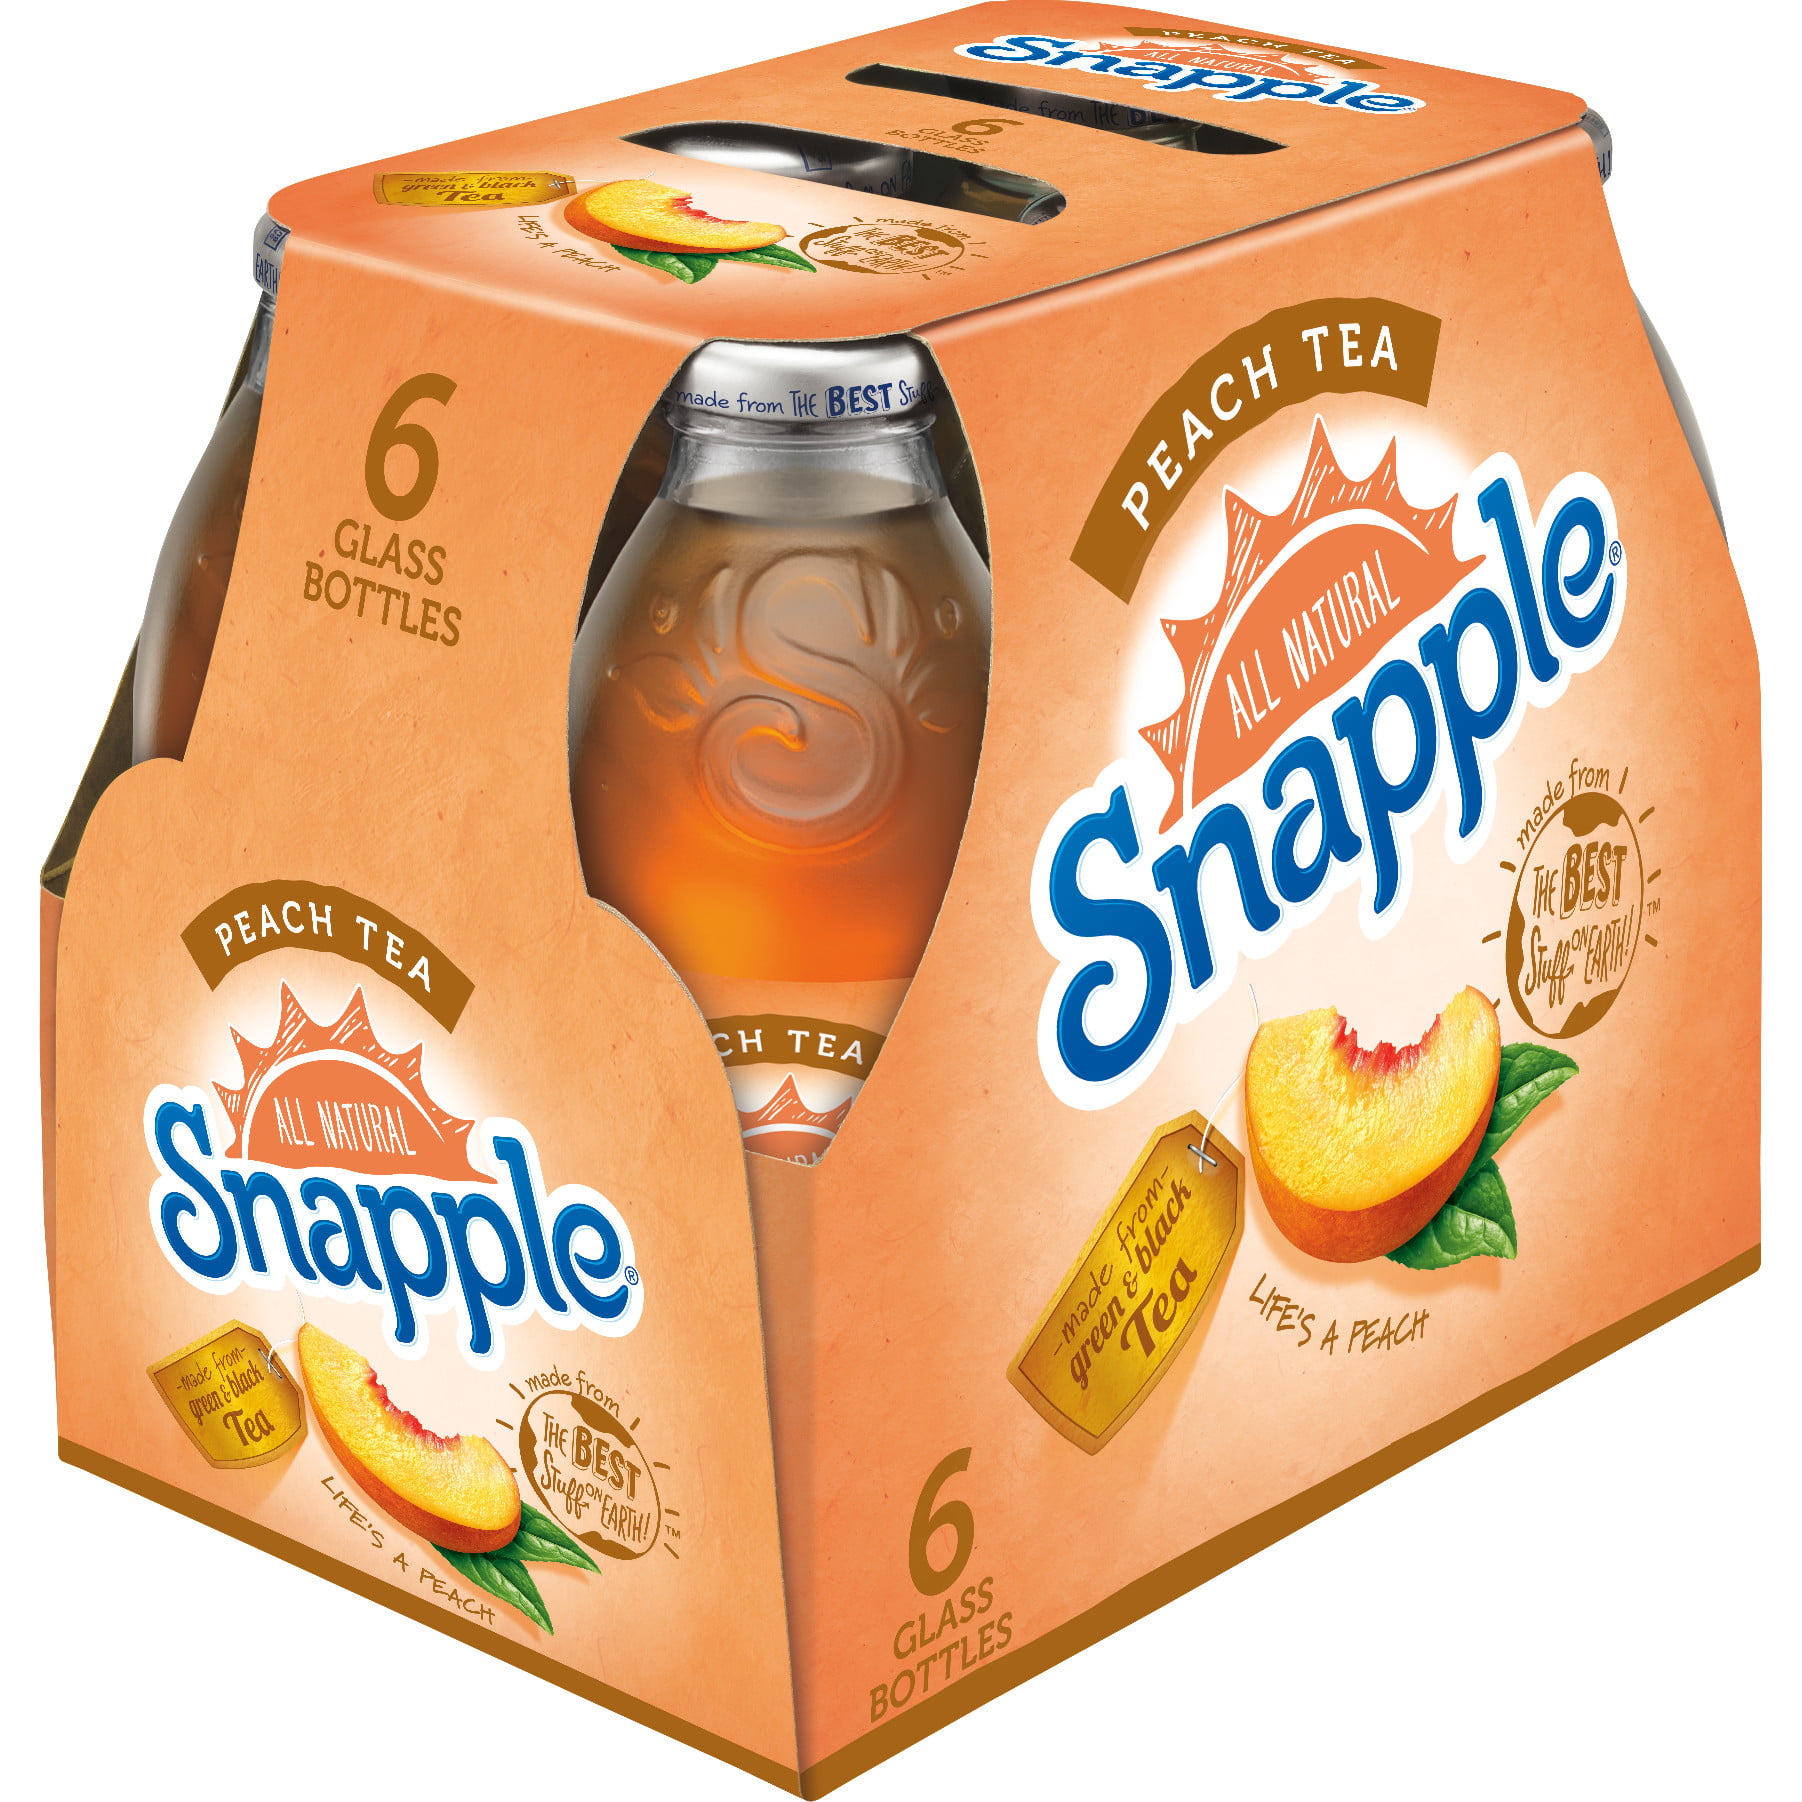 Snapple® Peach Tea, 6 pk / 16 fl oz - Harris Teeter